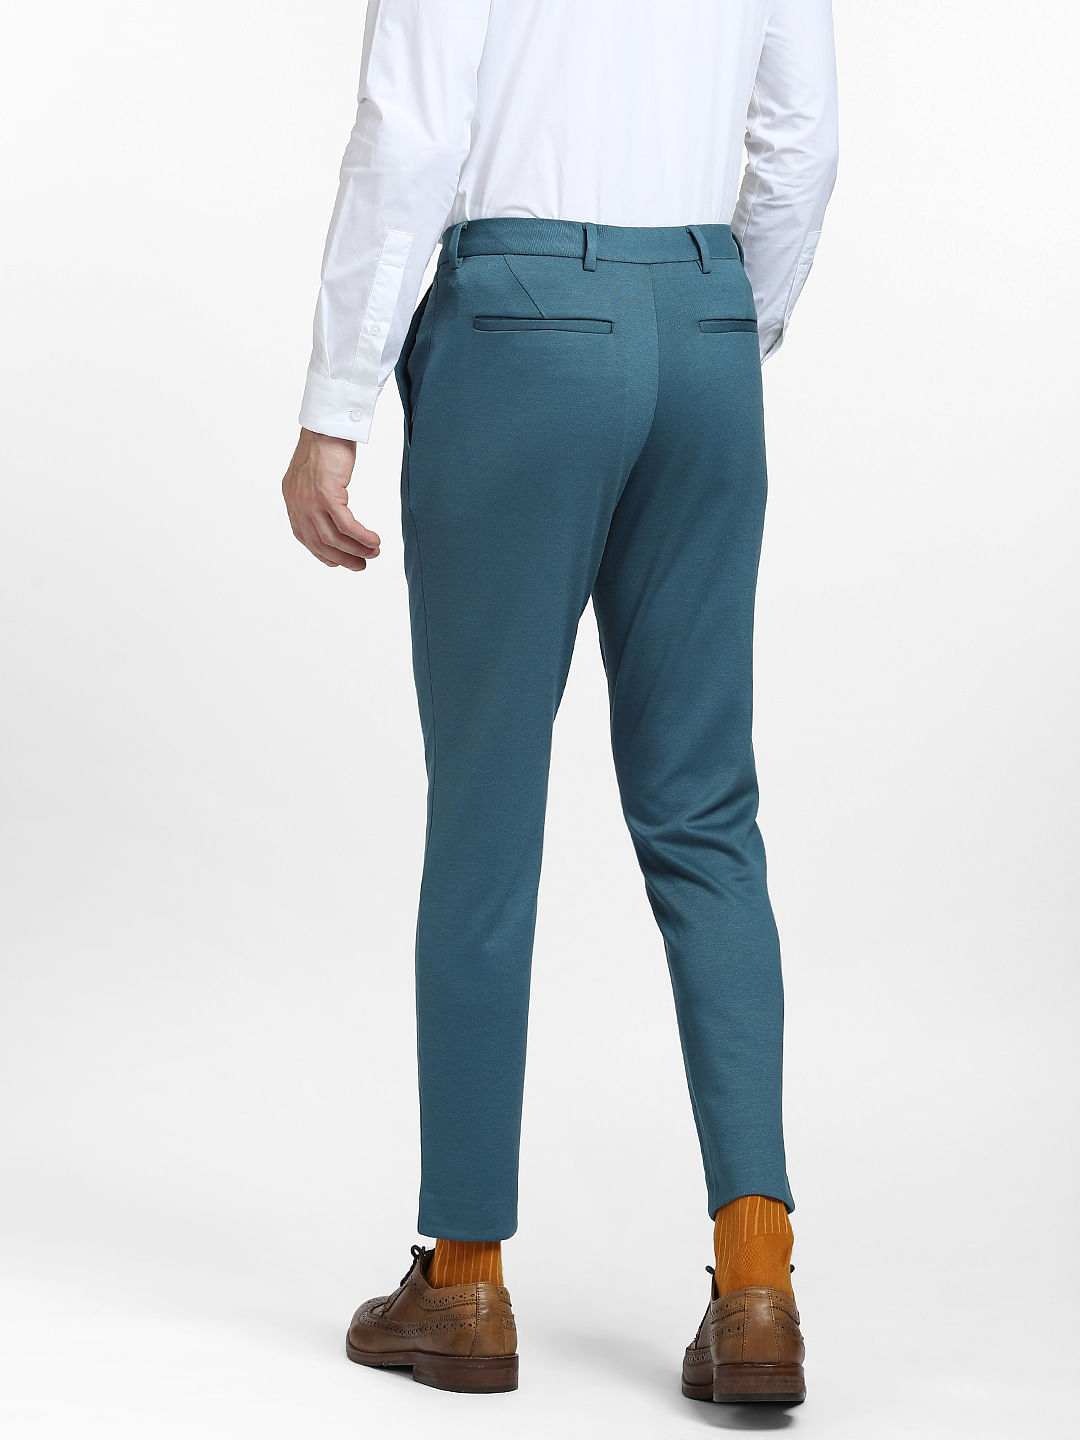 Decible formal Pants for Men  Mens Slim fit Formal Pant  Non Stretchable  Trouser 